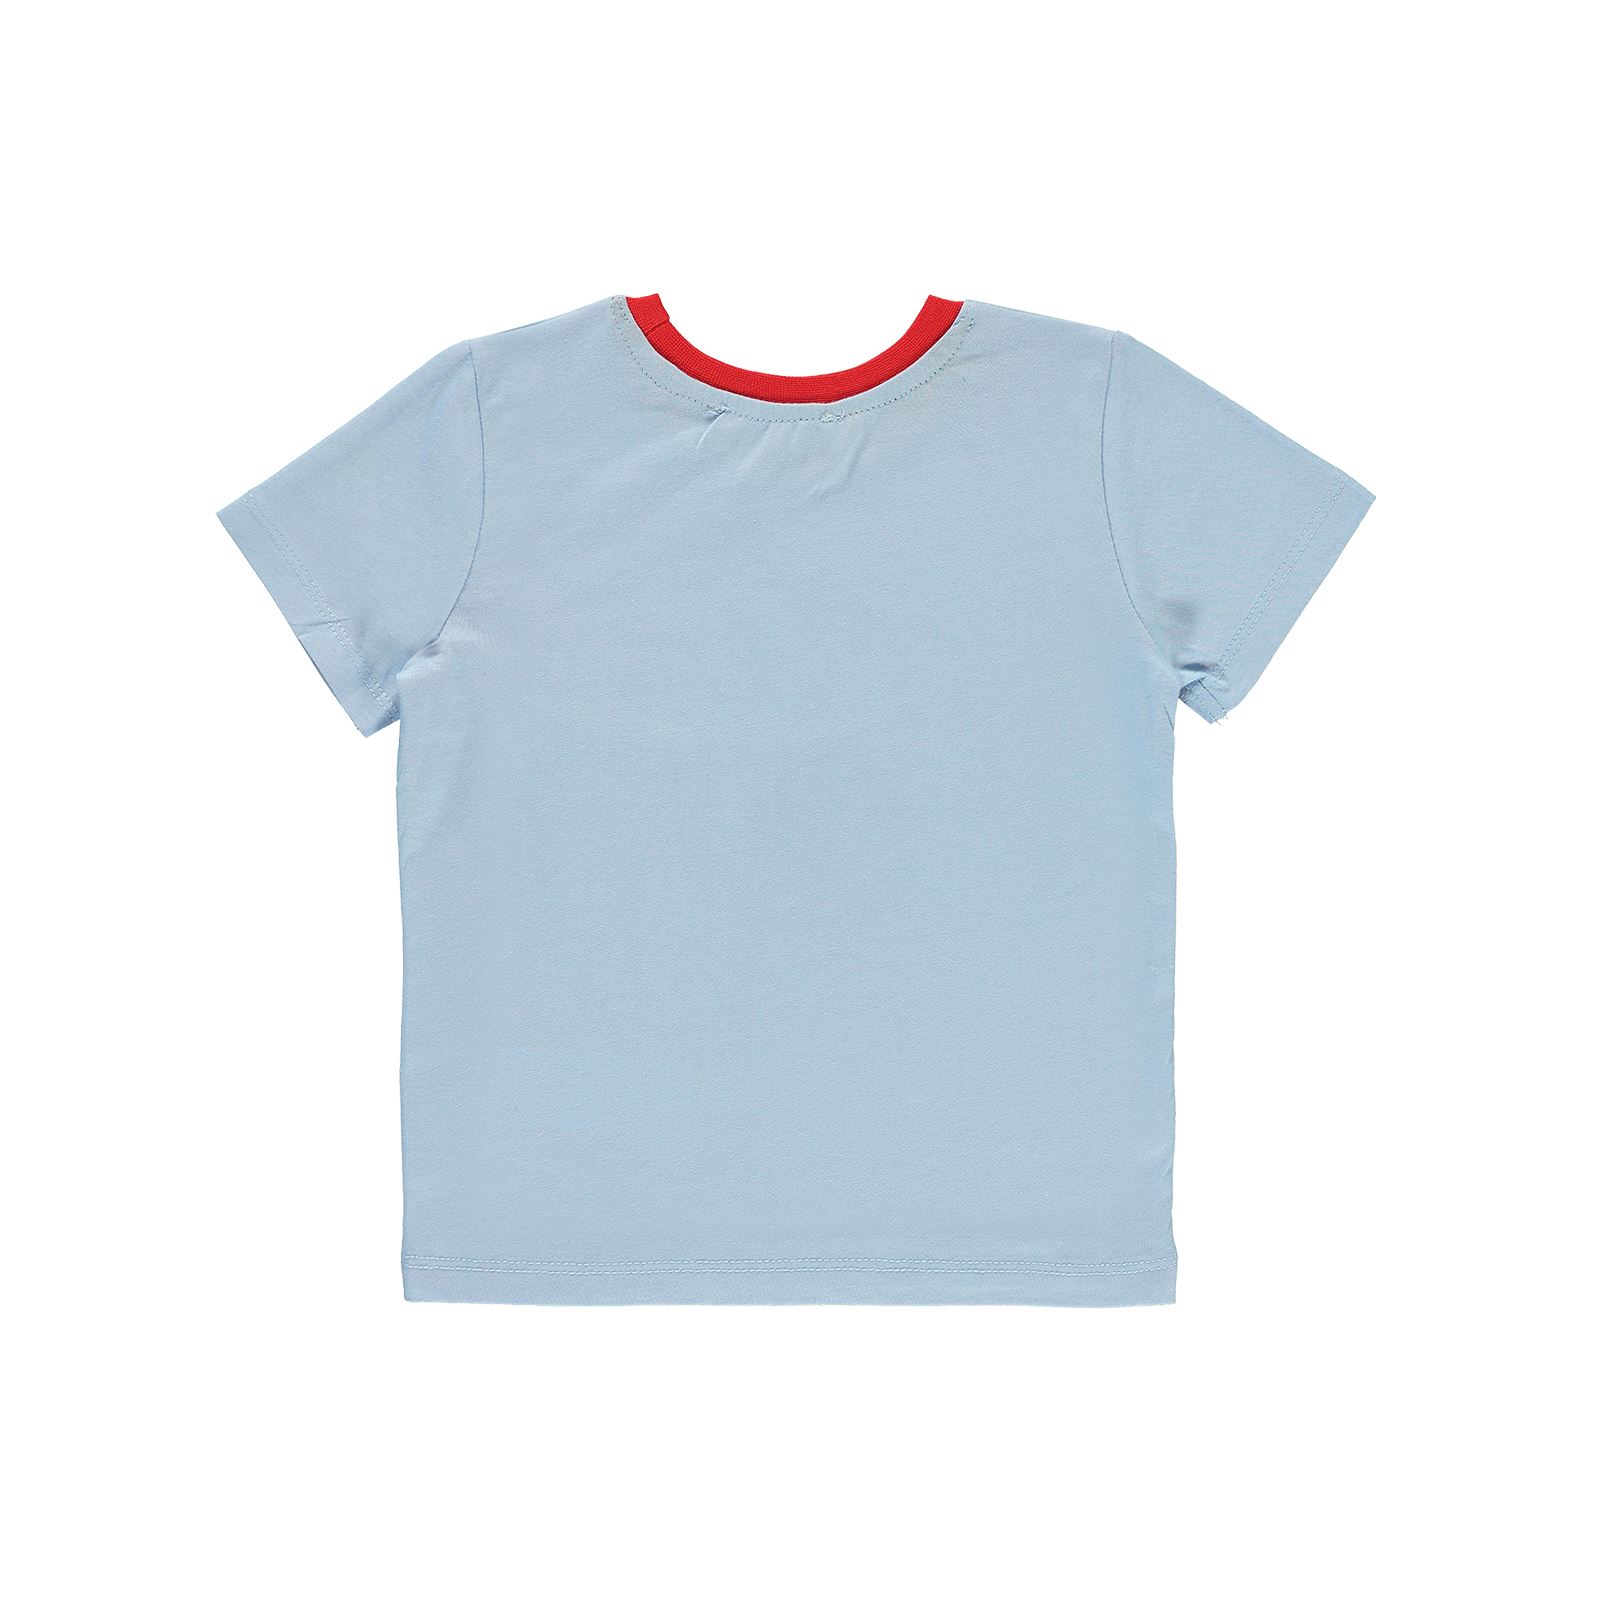 Small Socıety Erkek Çocuk Tişört 2-7 Yaş Açık Mavi